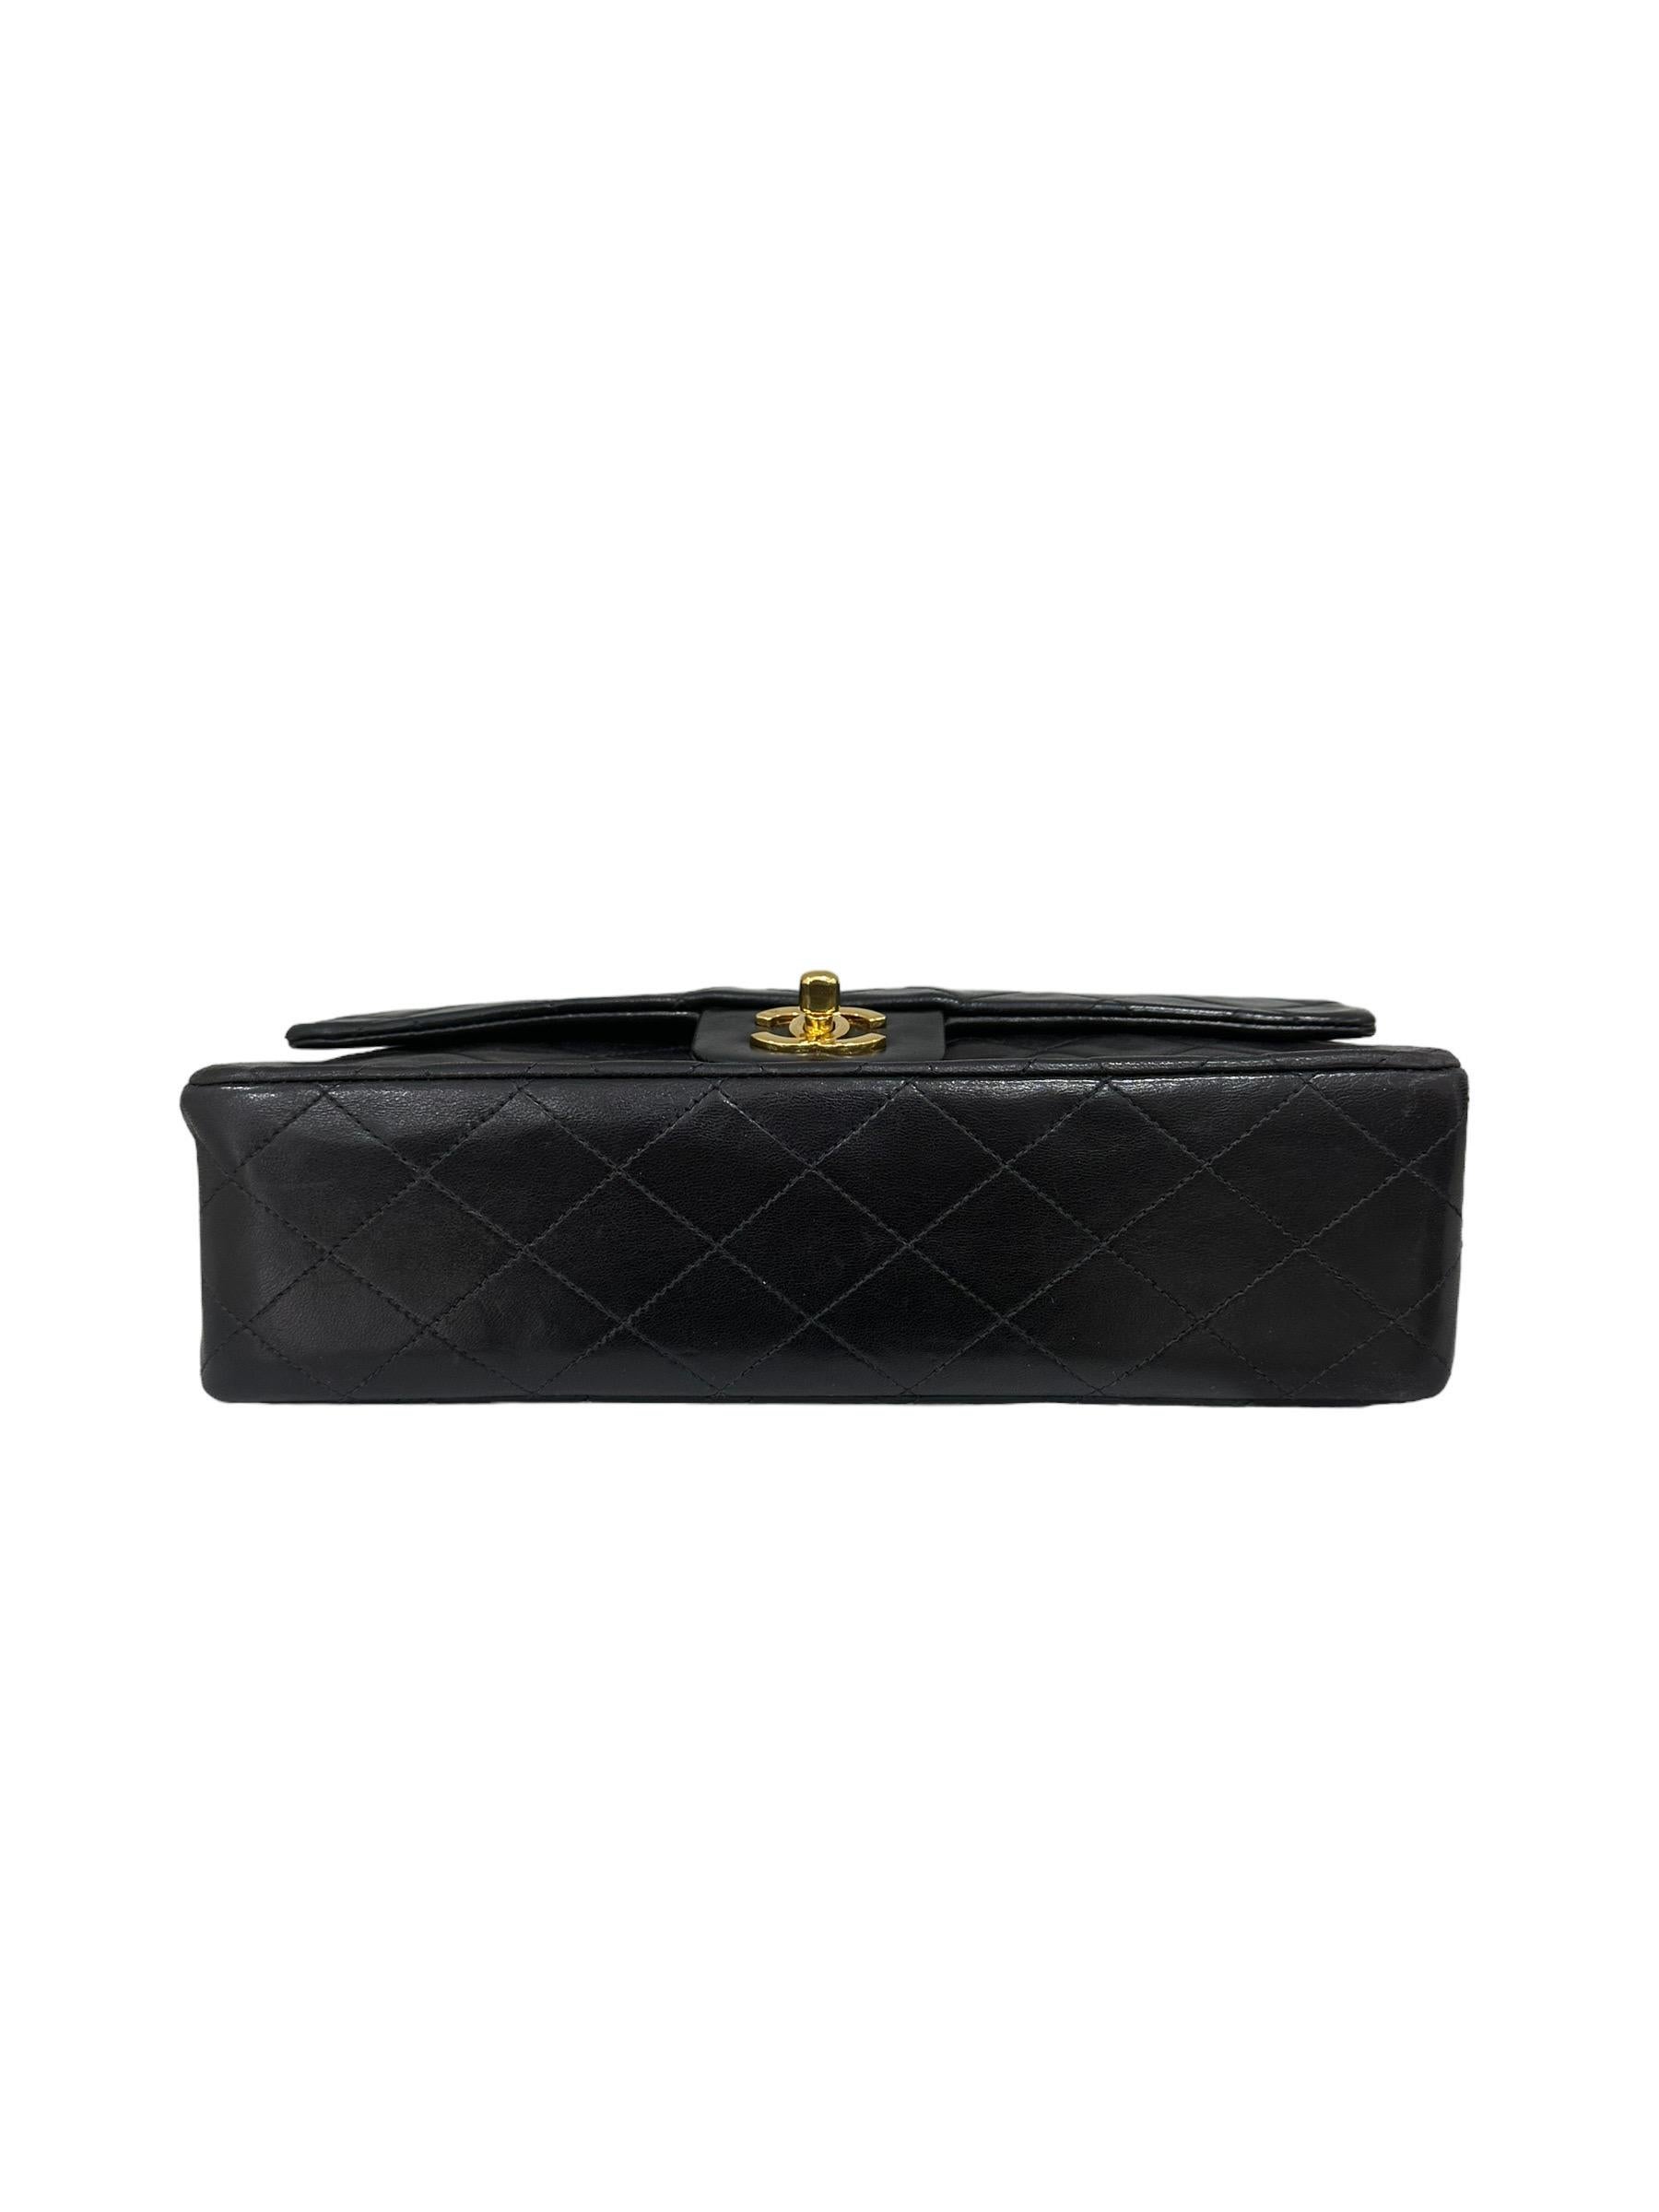 1996 Chanel Timeless Classic 2.55 Black Leather Top Shoulder Bag For Sale 4